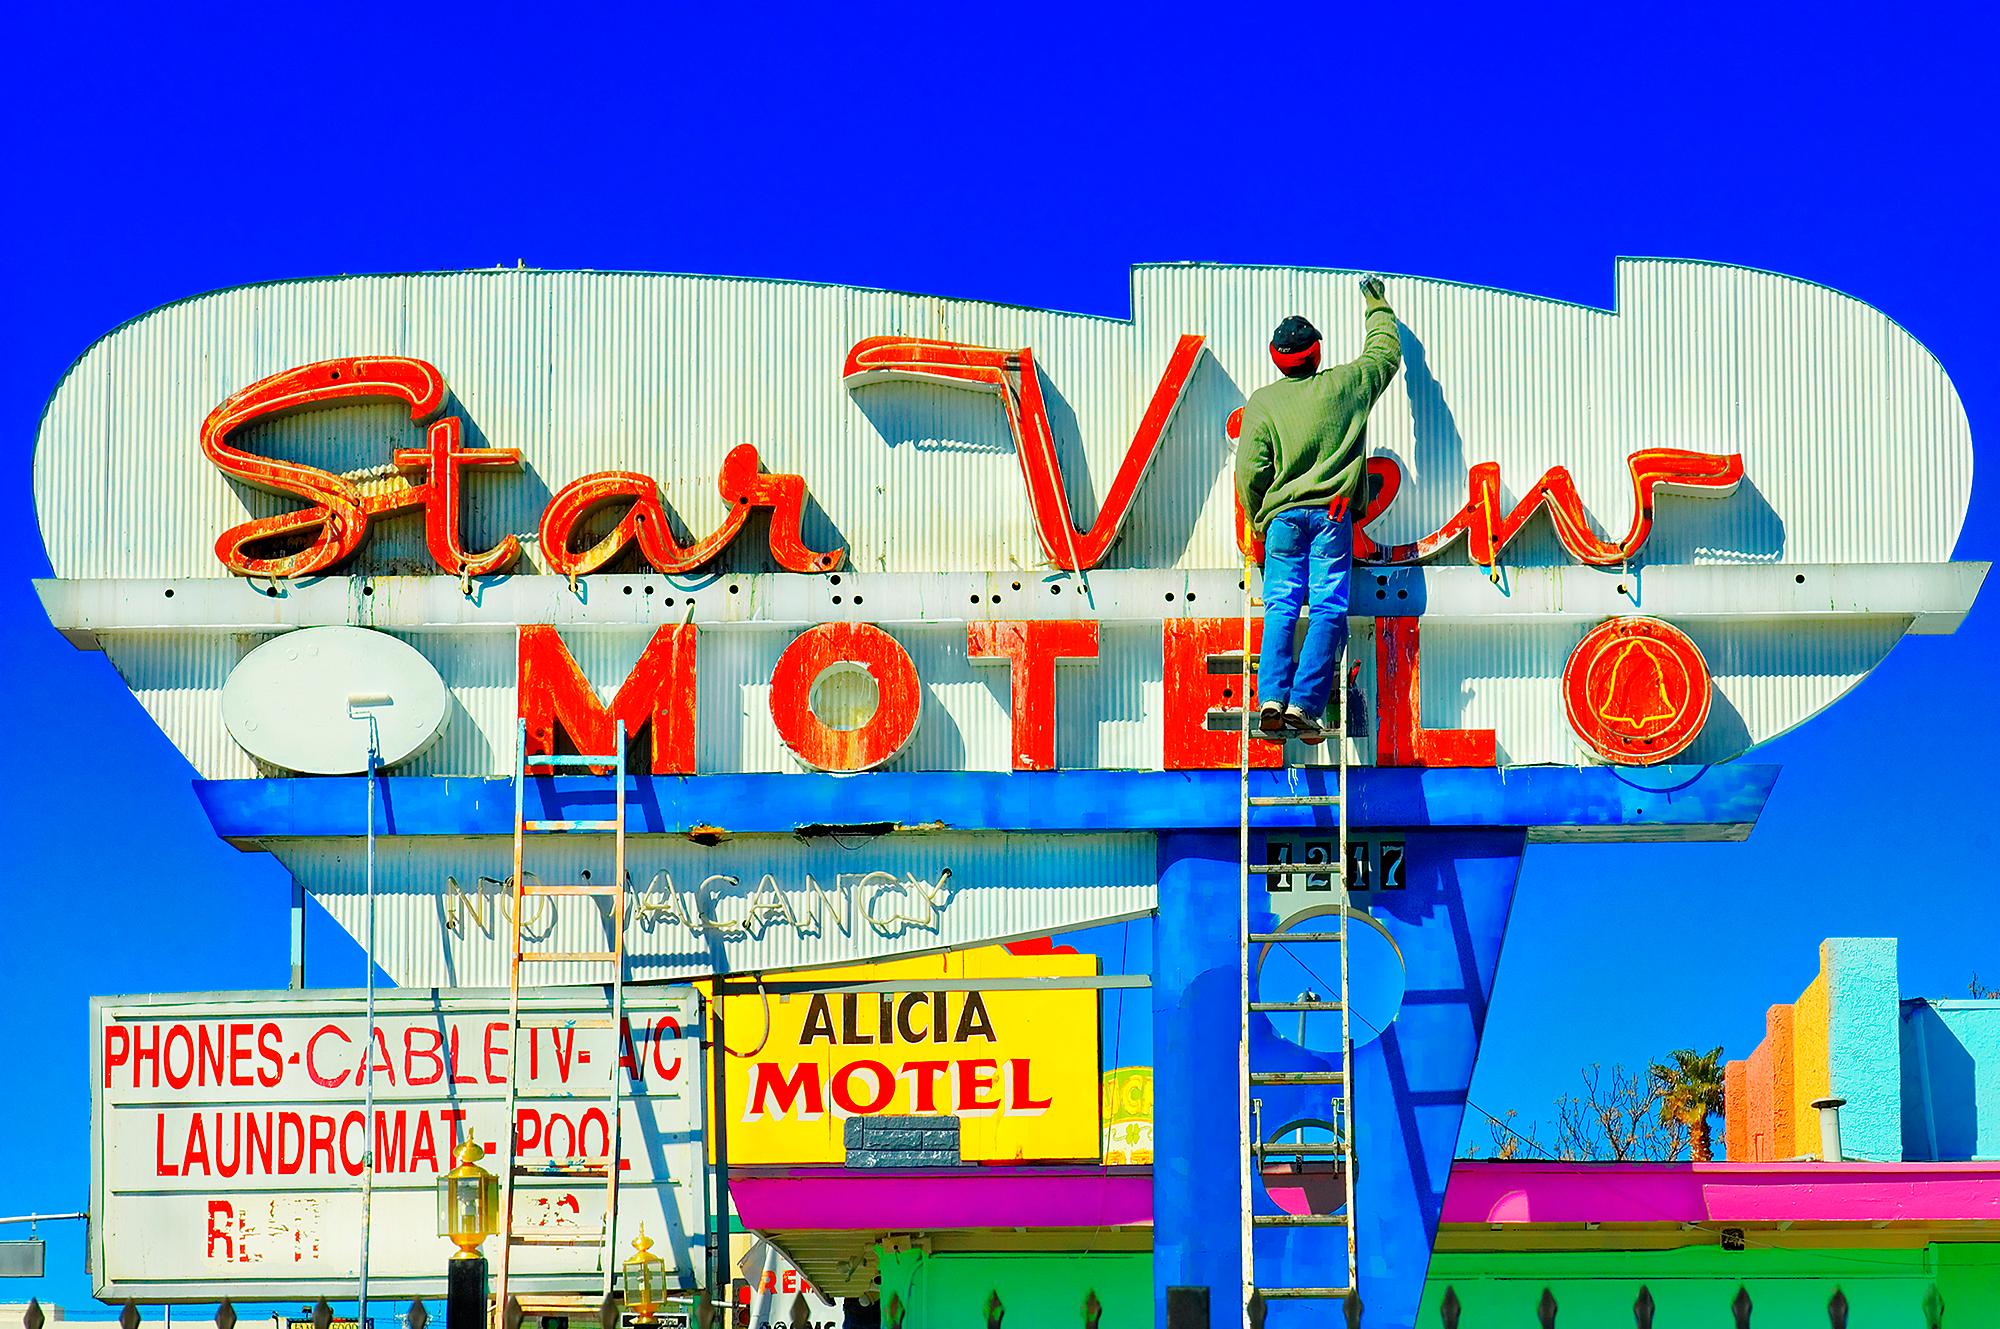 Star View Motel Fremont Street Las Vegas - Mid Century